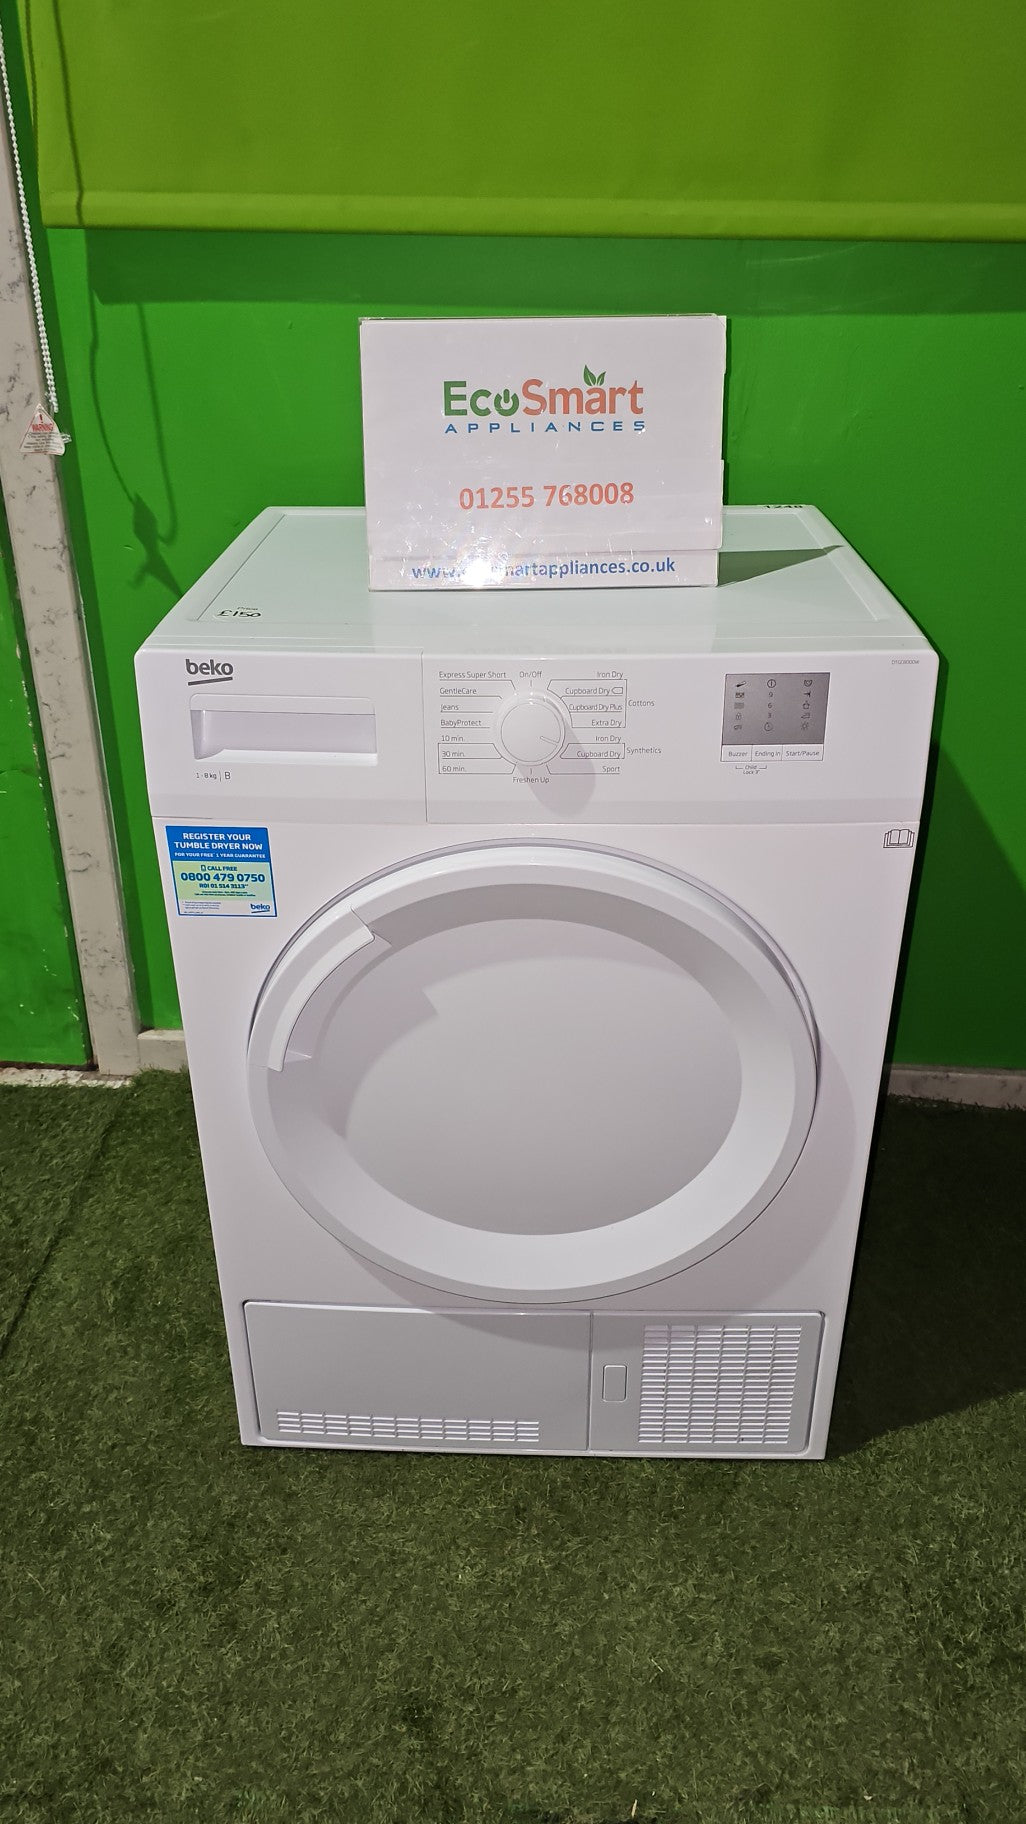 EcoSmart Appliances - Beko 8KG Condenser Tumble Dryer (1248)